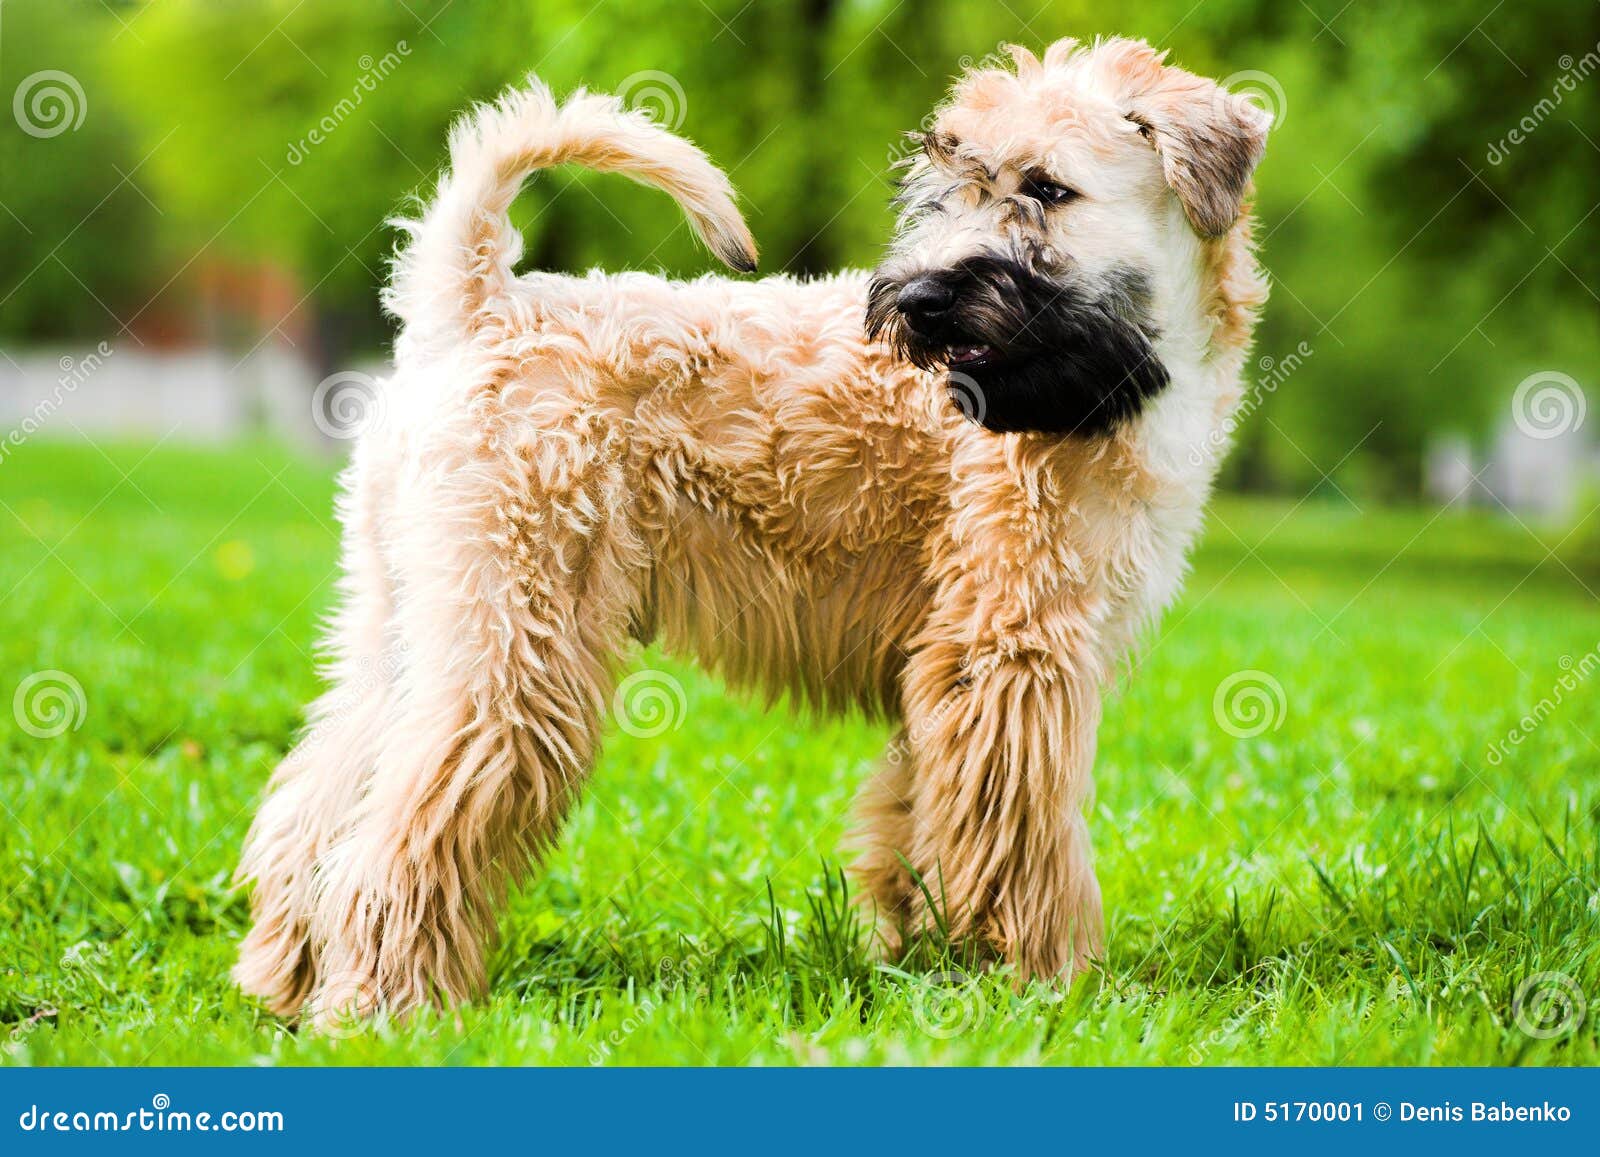 Irish Soft Coated Wheaten Terrier Stock Image - Image of brown, happy ...